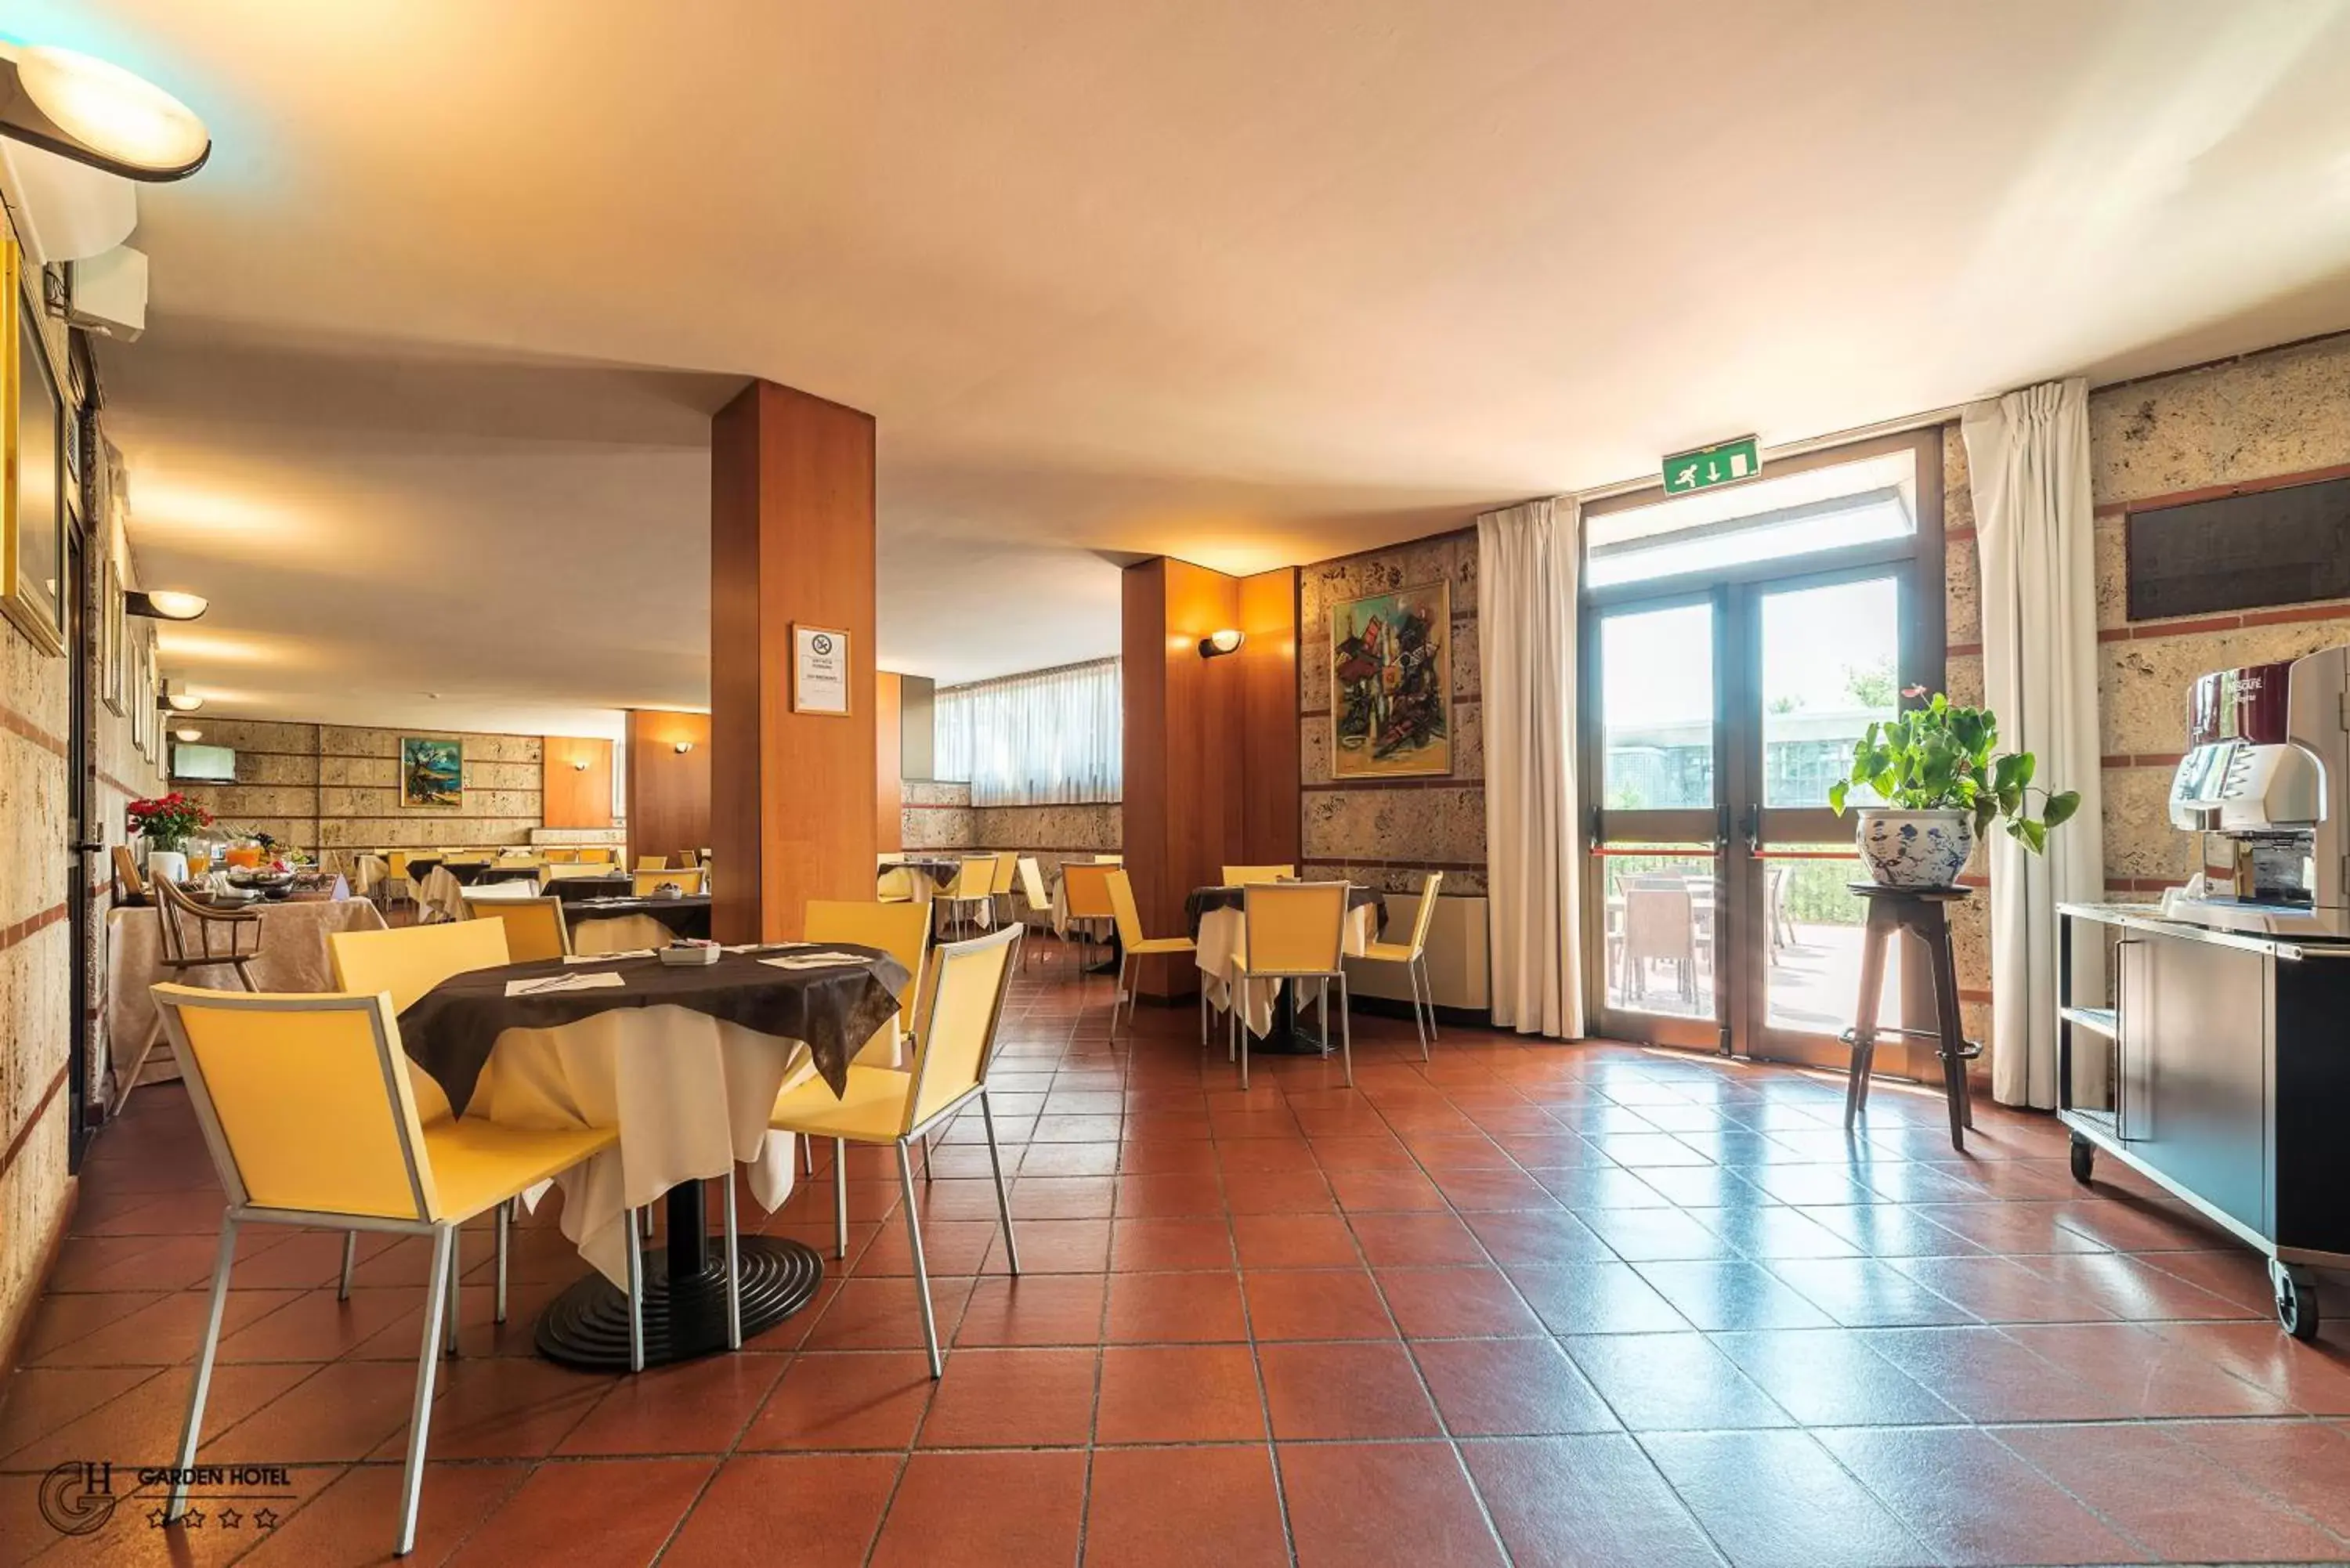 Breakfast, Restaurant/Places to Eat in Hotel Garden Terni